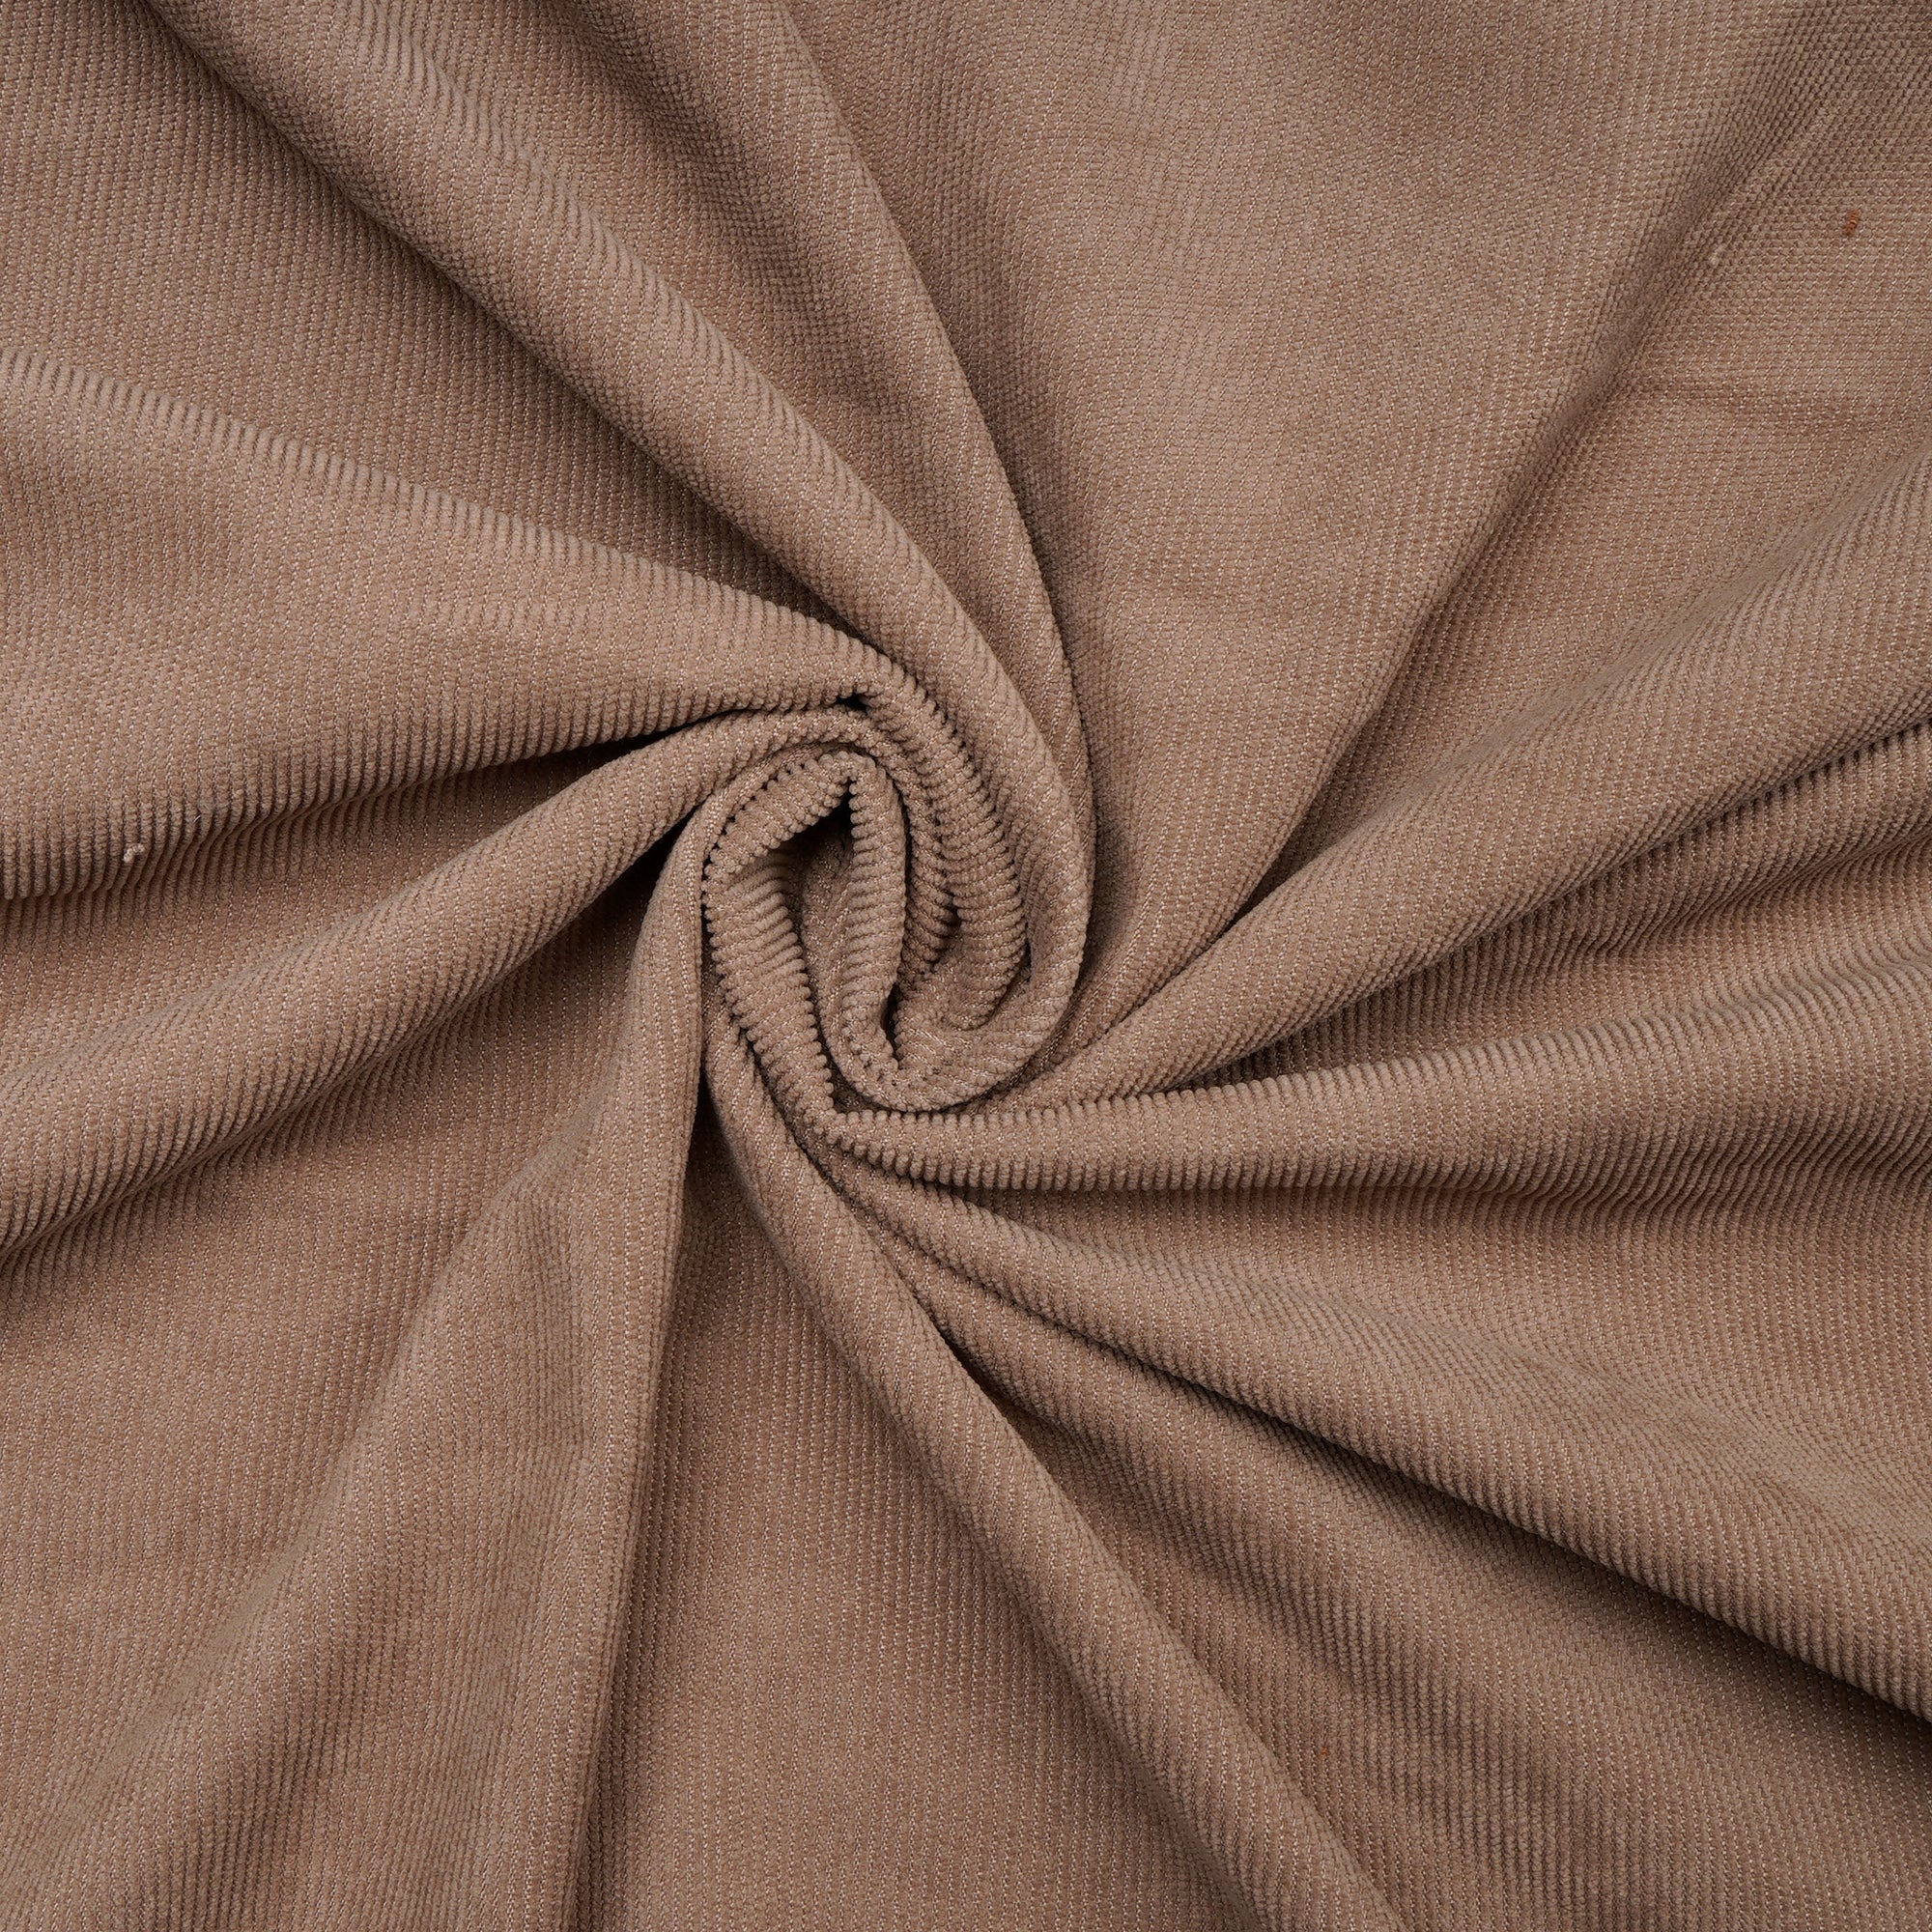 Cream Imported Cotton Corduroy Fabric (60" Wide)